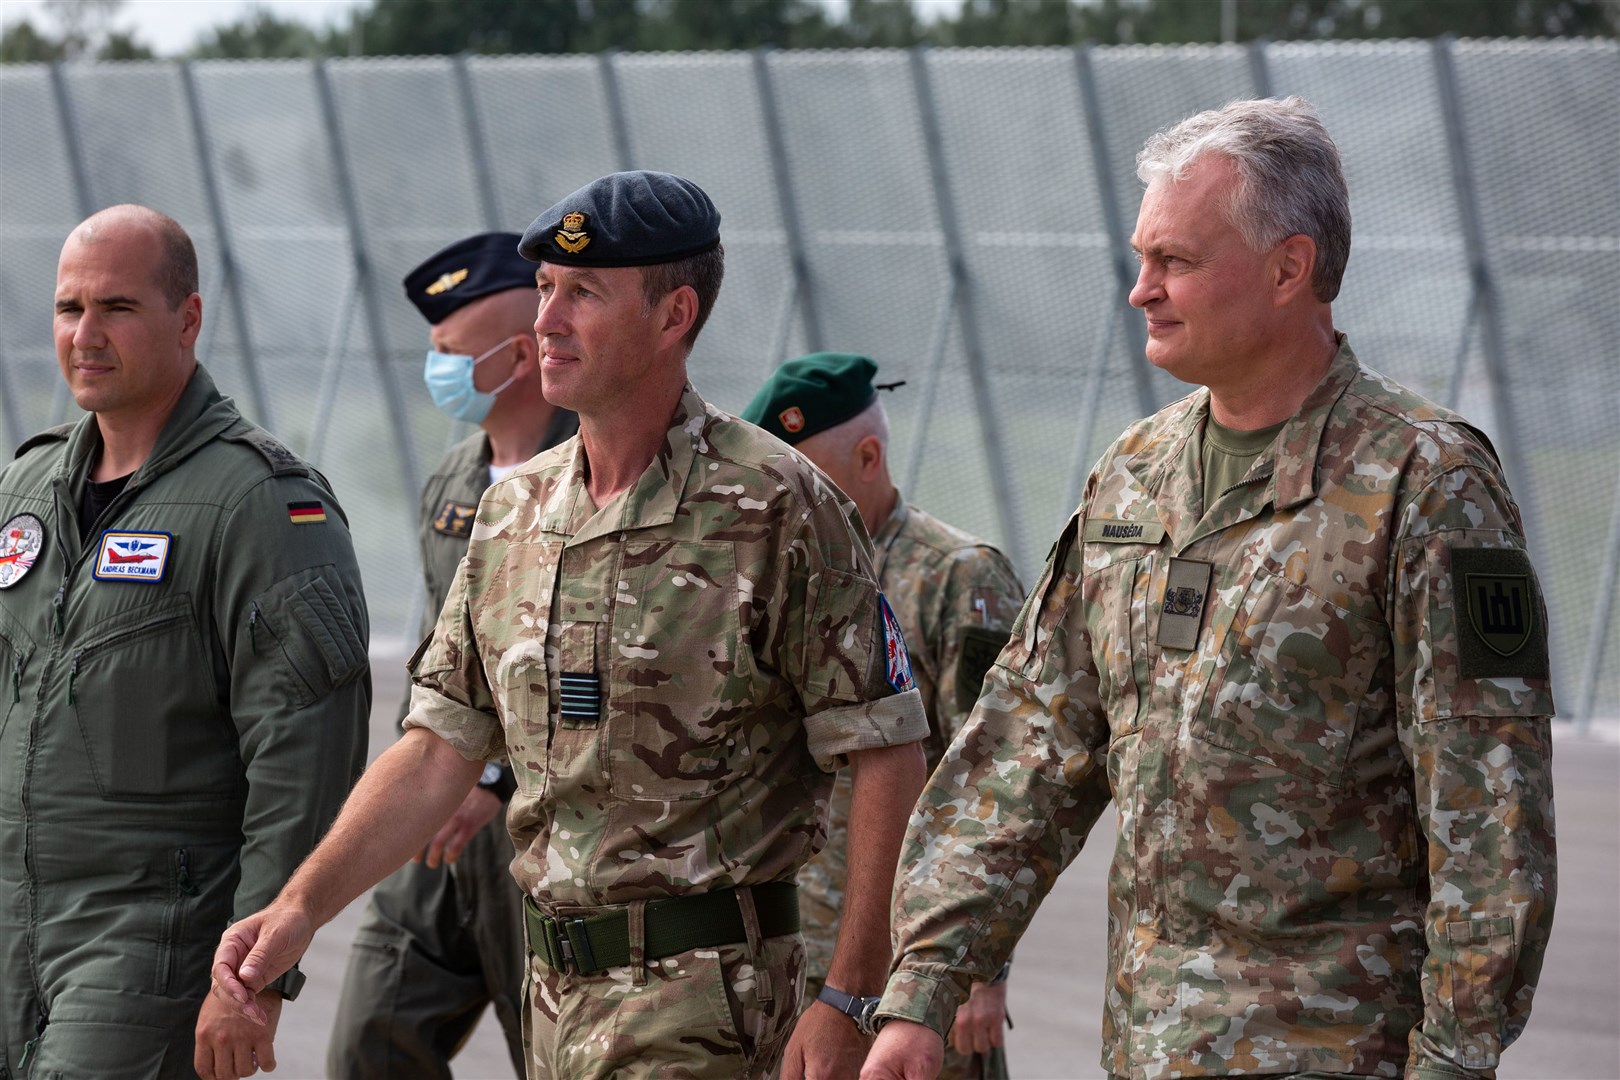 Gitanas Nausėda, the president of Lithuania, visits RAF deployed on a NATO Baltic air policing mission.